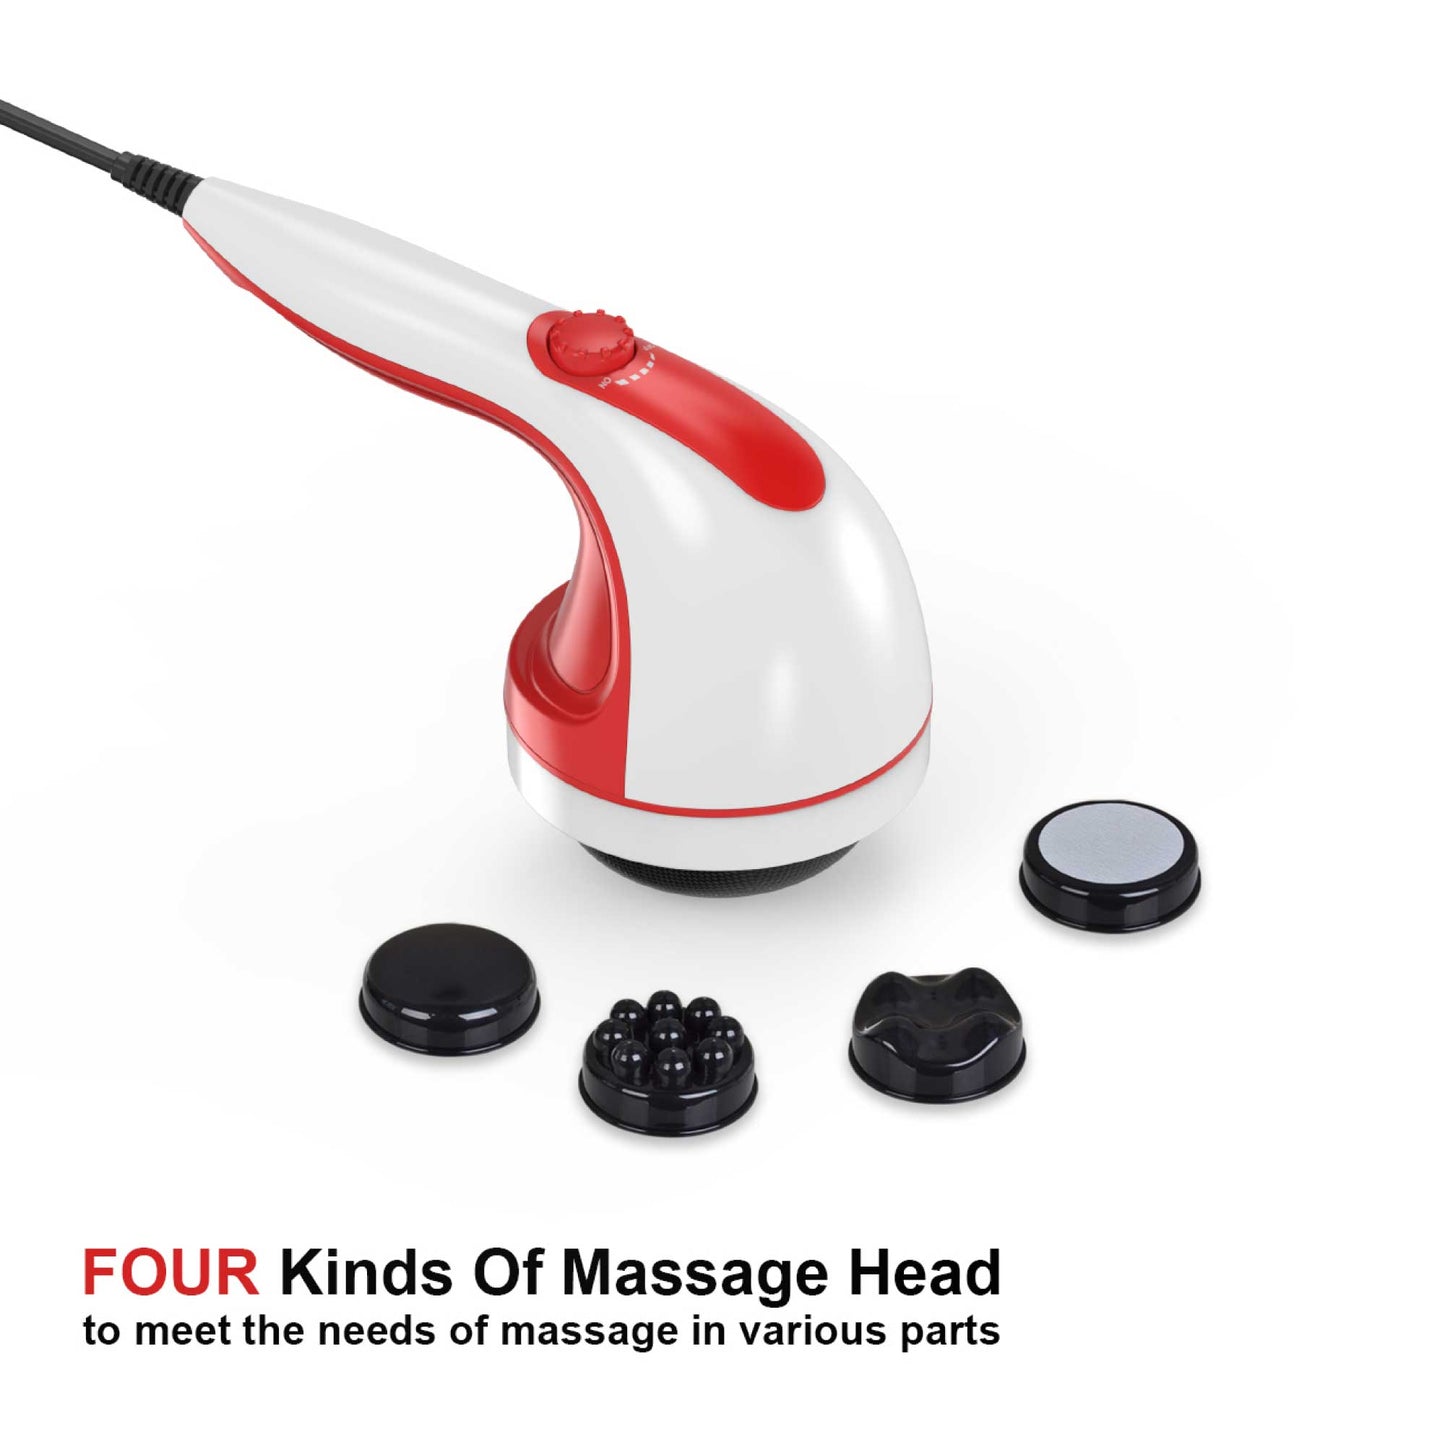 Handheld Vibration Massager Red - 4 Interchangeable Heads Adjustable Speed